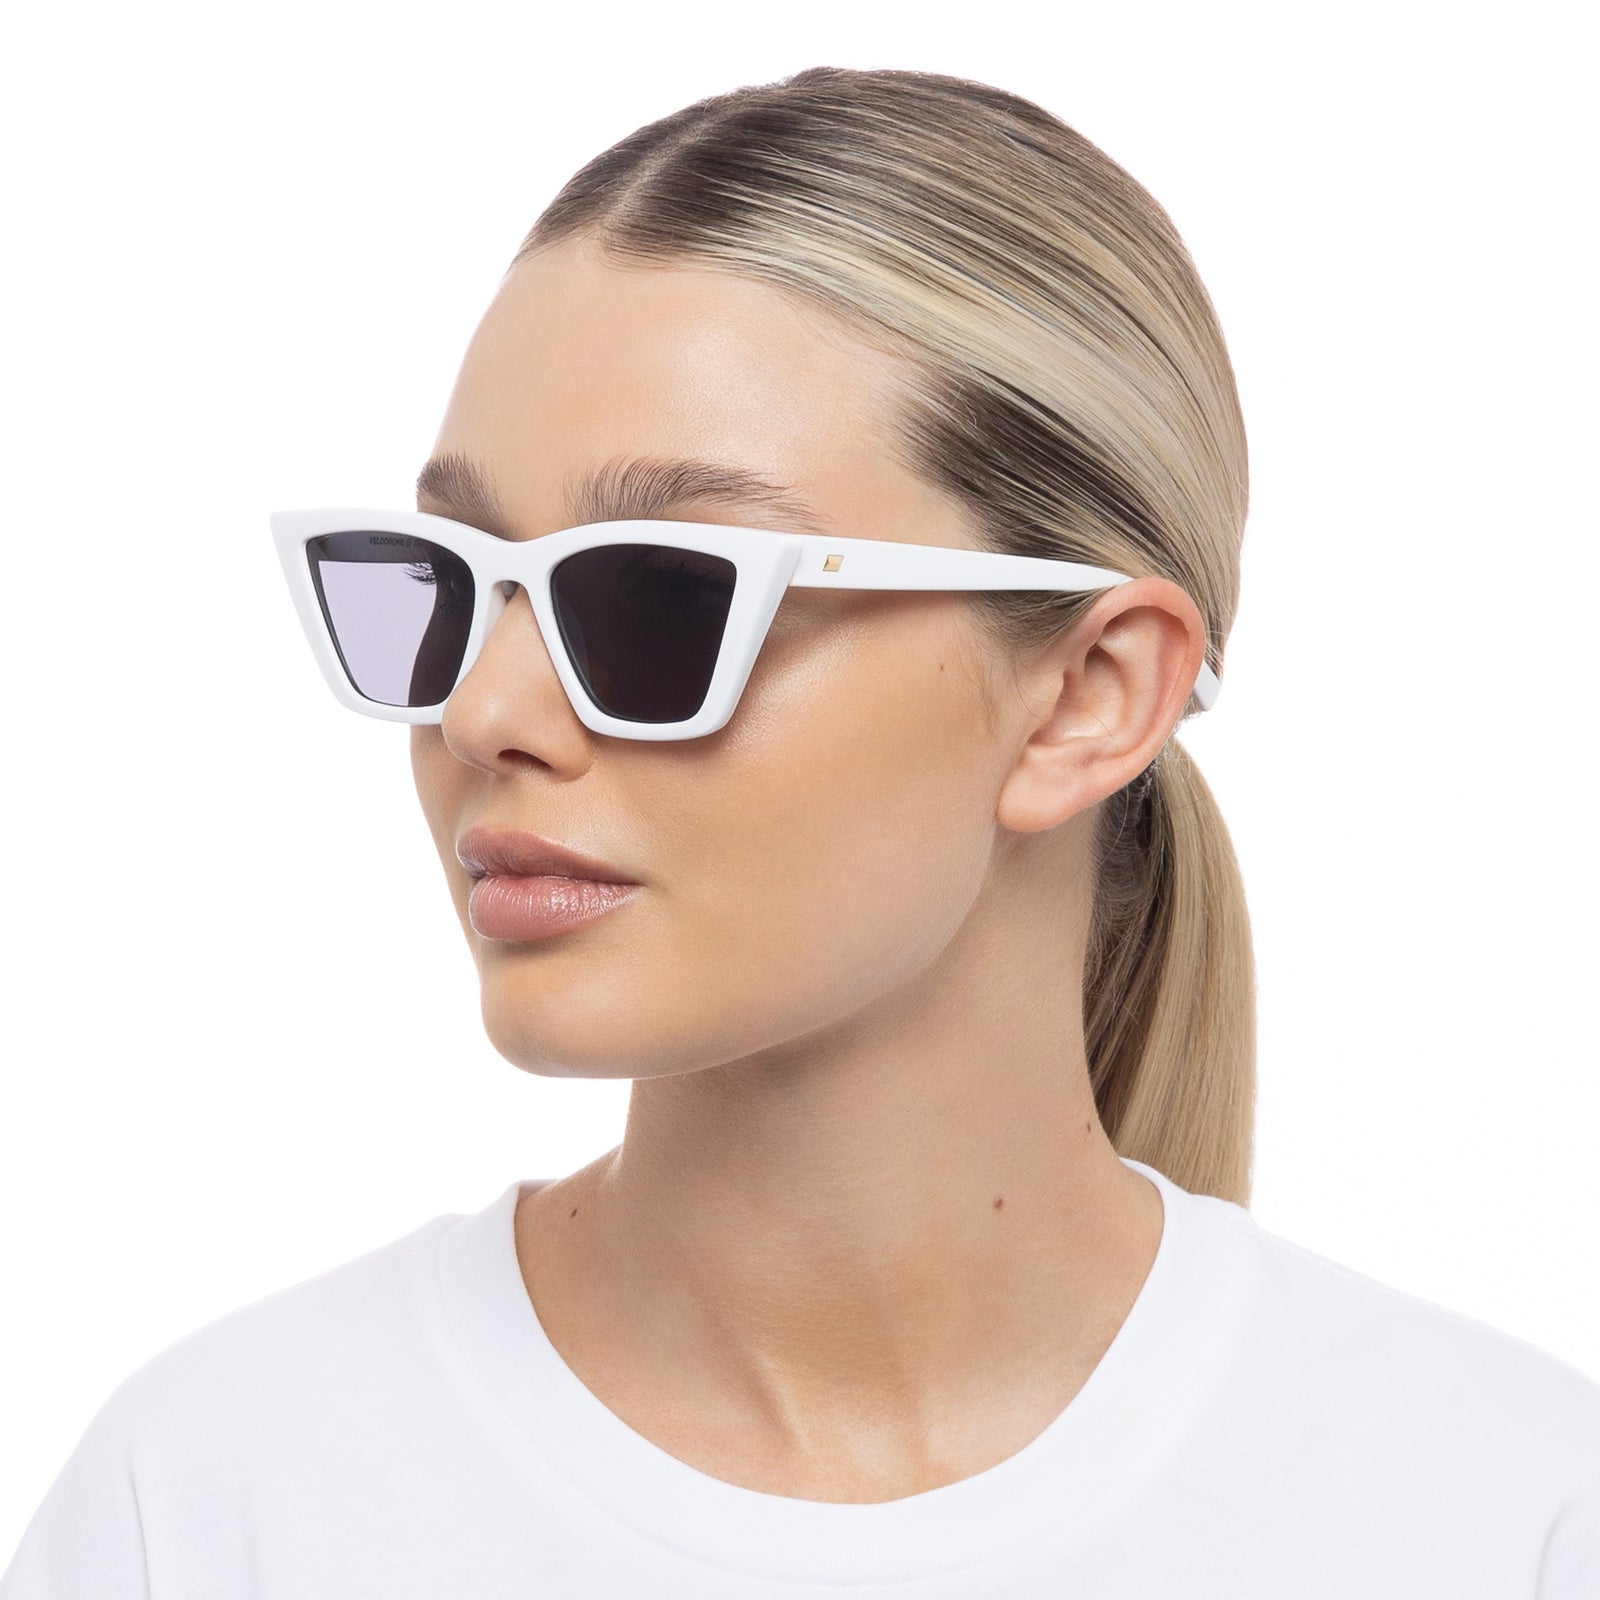 KANASTAL Polarized Sunglasses for Men Women Retro Square Classic 80 Shades  for Driving Fishing 100% UV400 Protection at Amazon Men's Clothing store